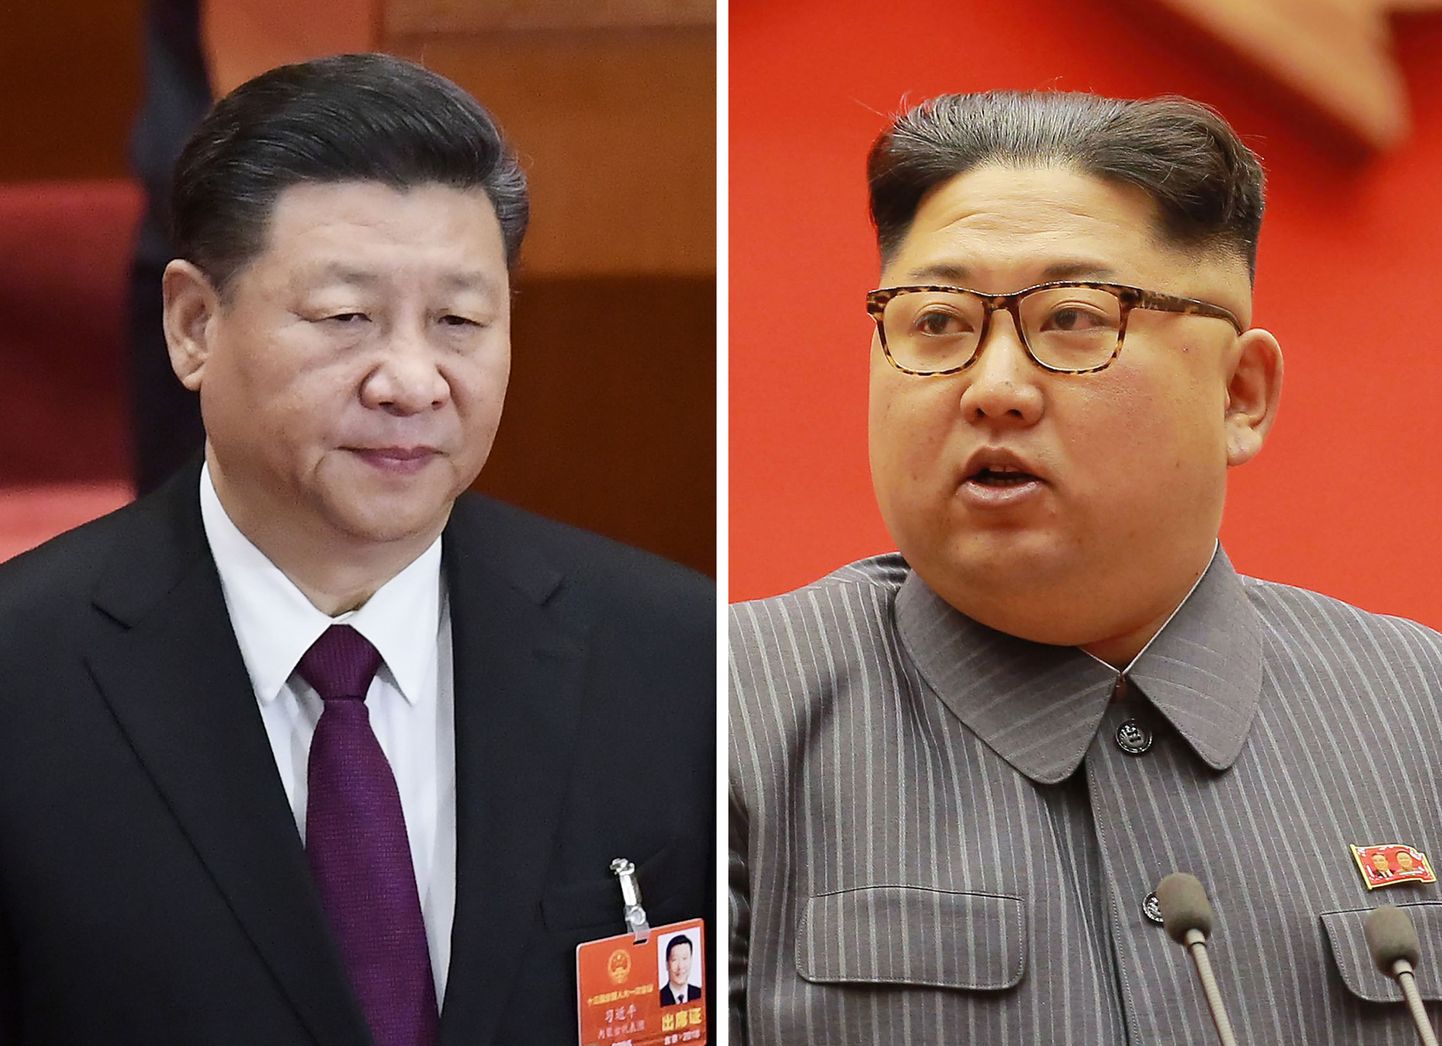 Hiina president Xi Jiping ja Põhja-Korea juht Kim Jong-un.